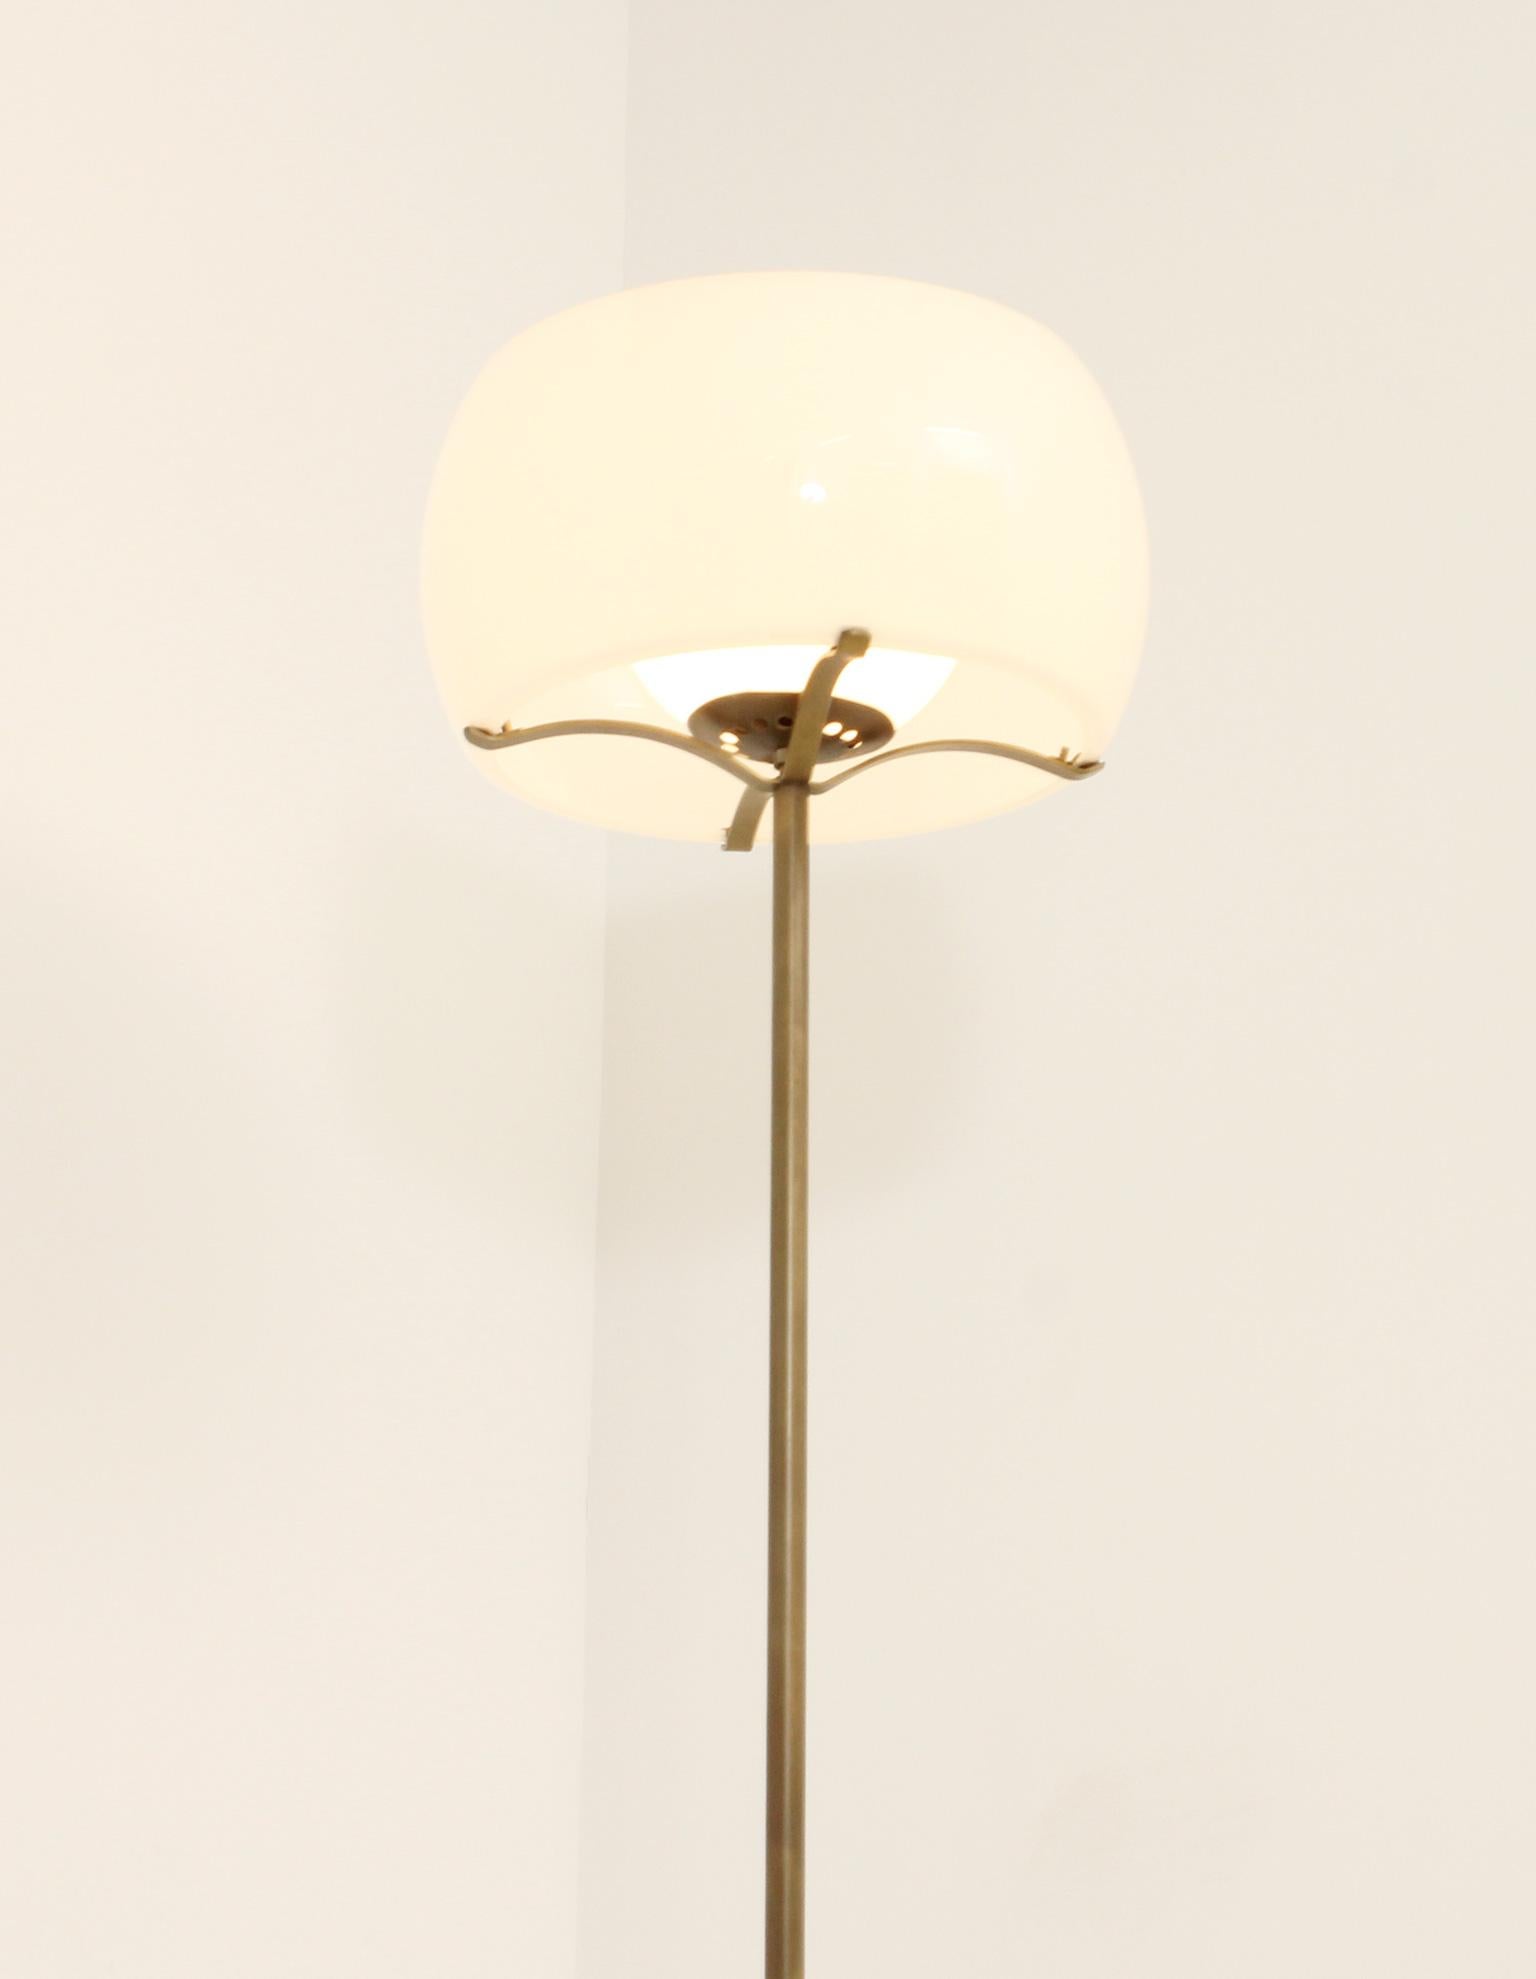 Clitunno Floor Lamp in Bronze Edition by Vico Magistretti for Artemide, 1963 For Sale 6